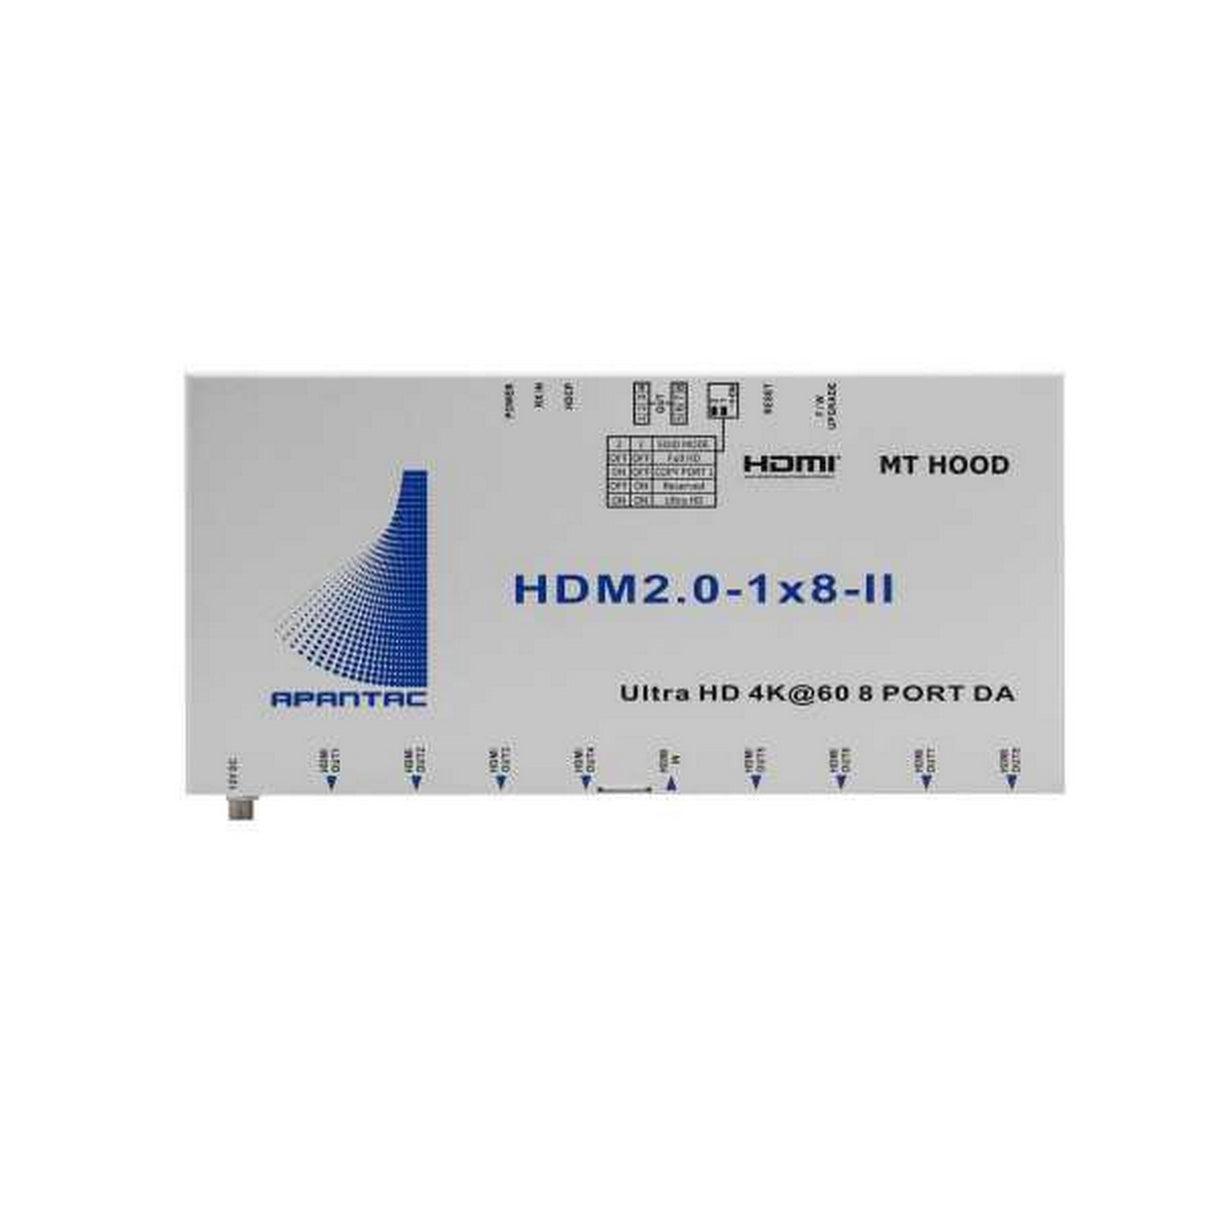 Apantac HDM2.0-1x8-II 1 x 8 HDMI 2.0 Splitter